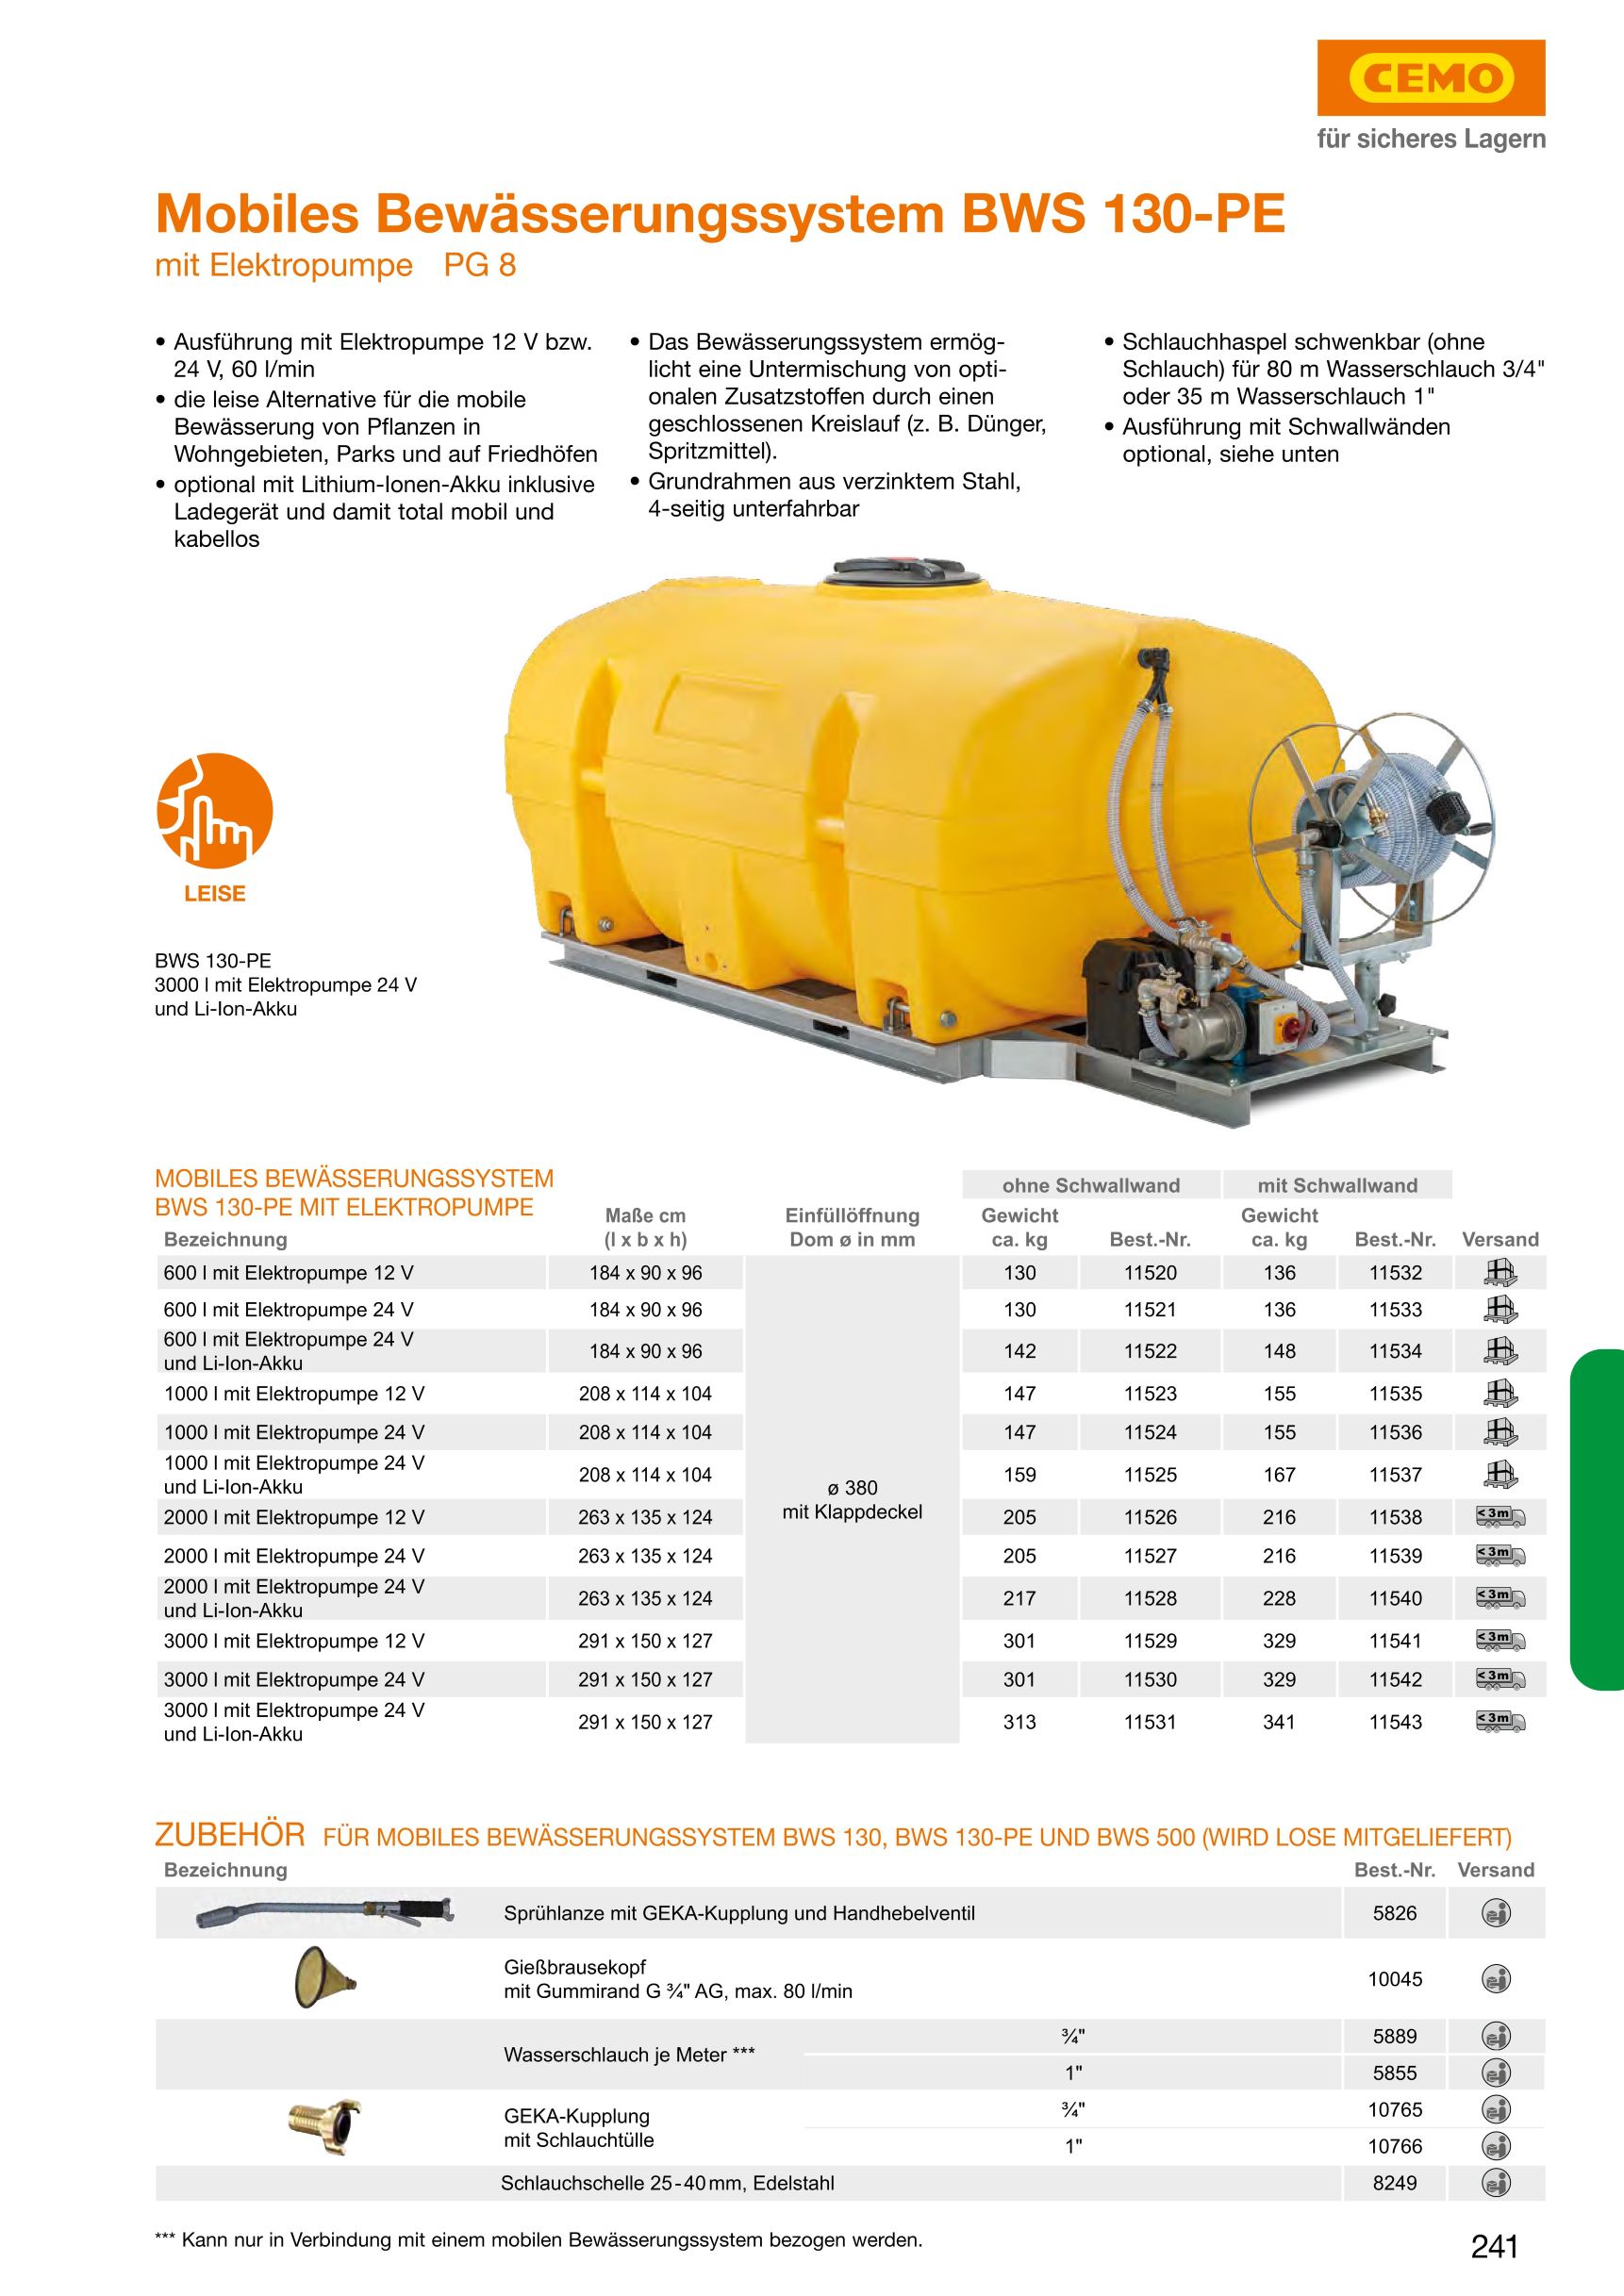 CEMO Mobiles Bewässerungssystem BWS 130-PE, 2000 l, 12 V Pumpe, Schwallwände - 11538